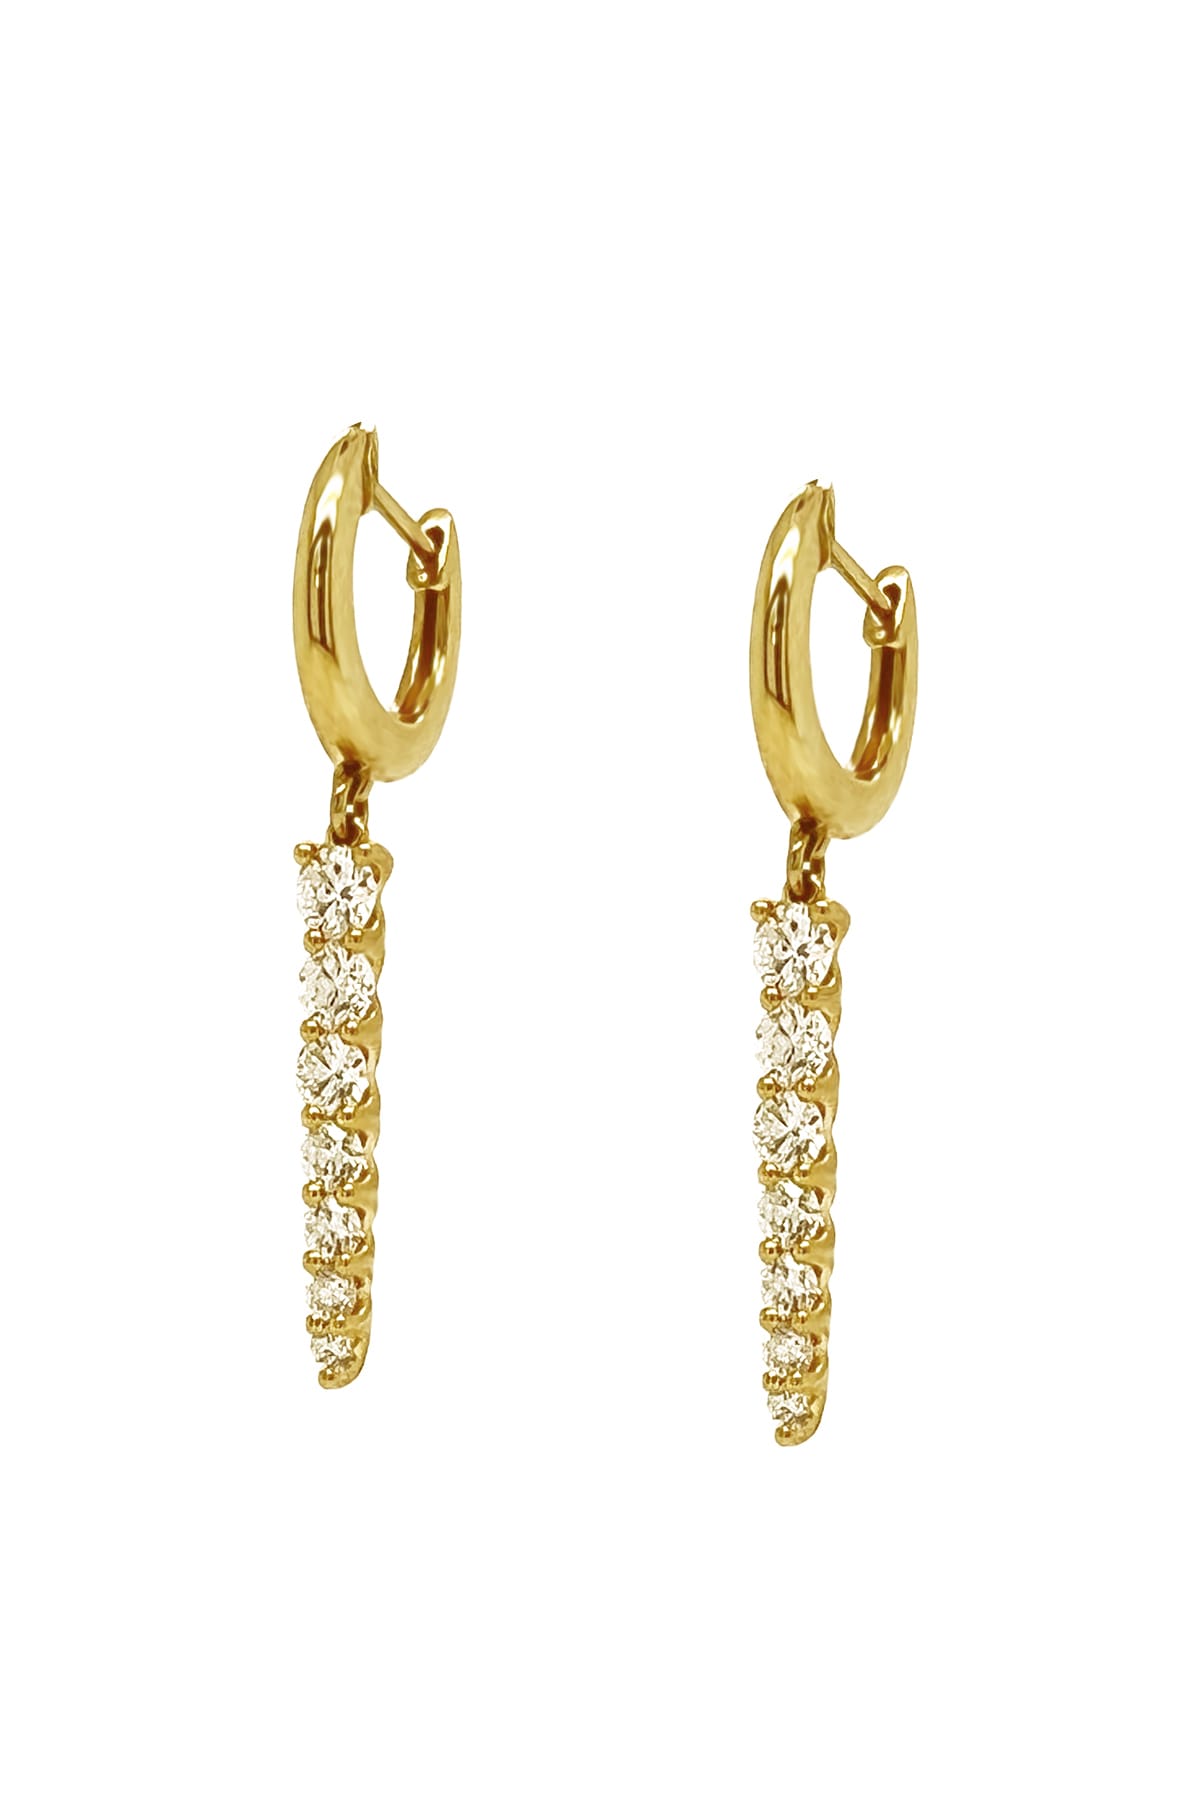 18 Carat Yellow Gold Identity Drop Earrings available at LeGassick Diamonds and Jewellery Gold Coast, Australia.